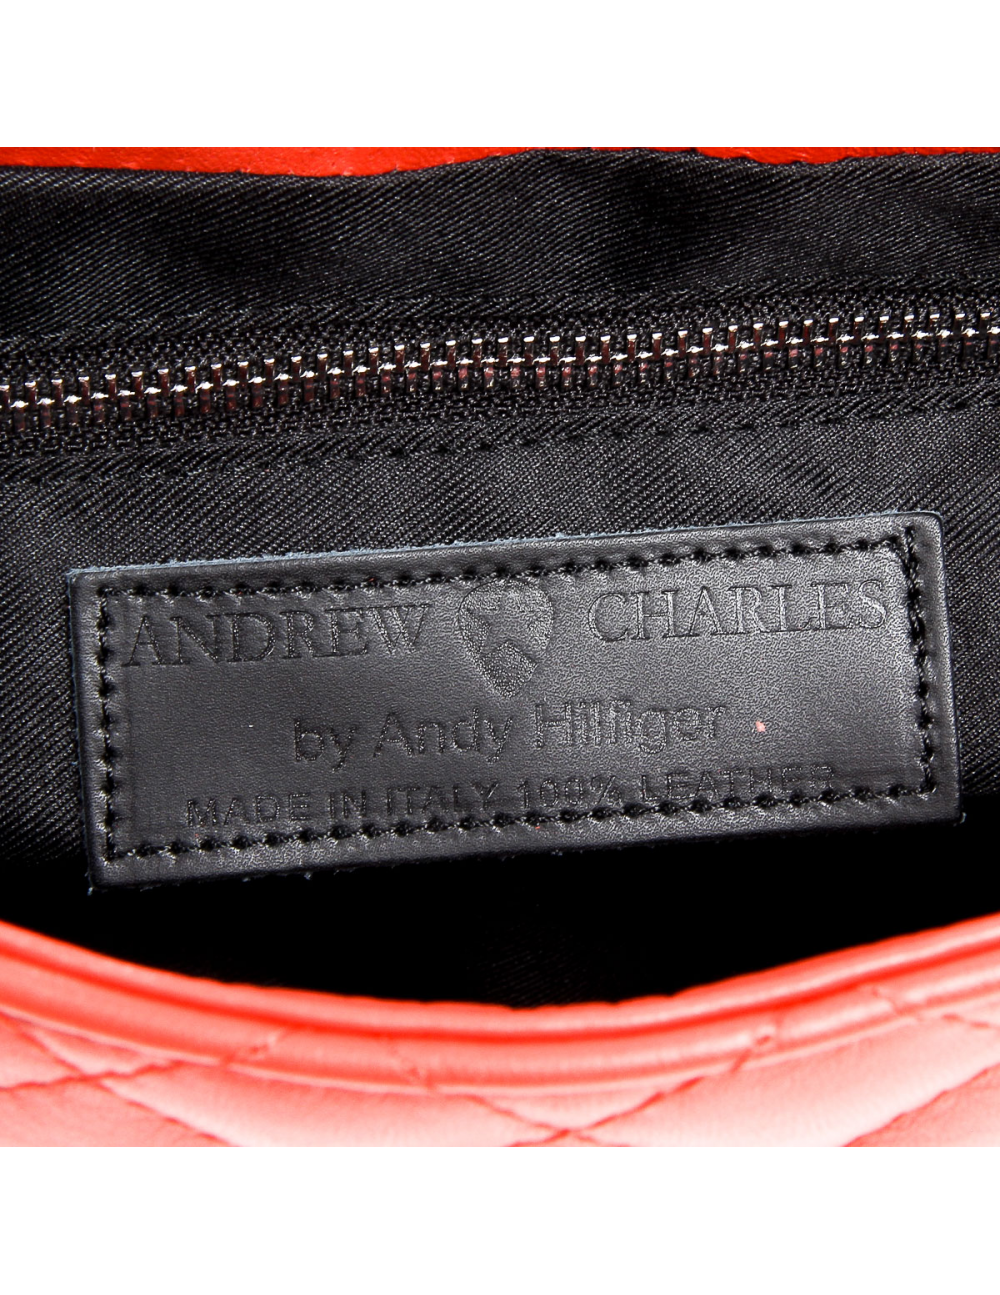 Andrew Charles Womens Handbag Red AZALEA - YuppyCollections